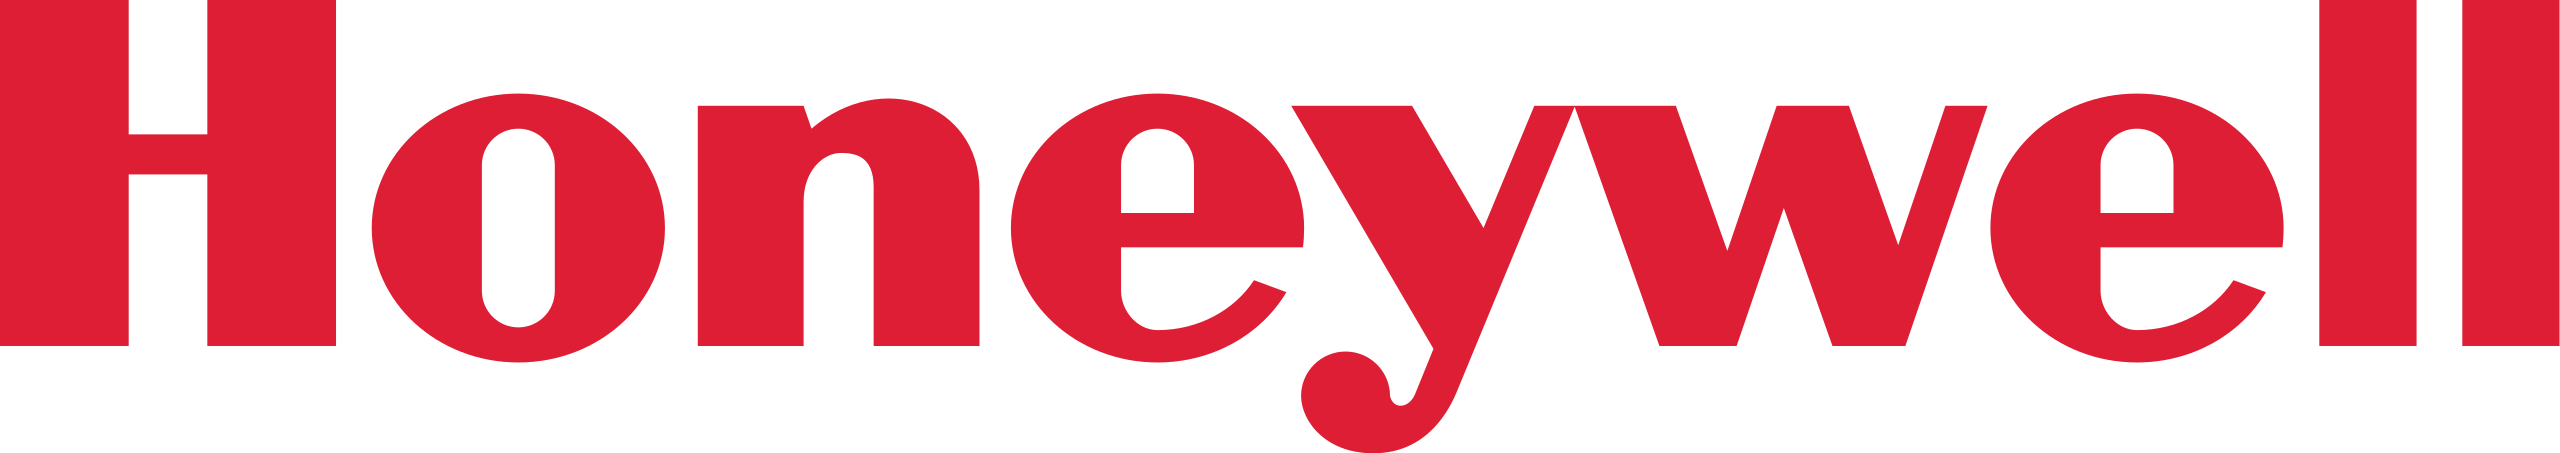 Honeywell Logo Brands We Use Stellar Security